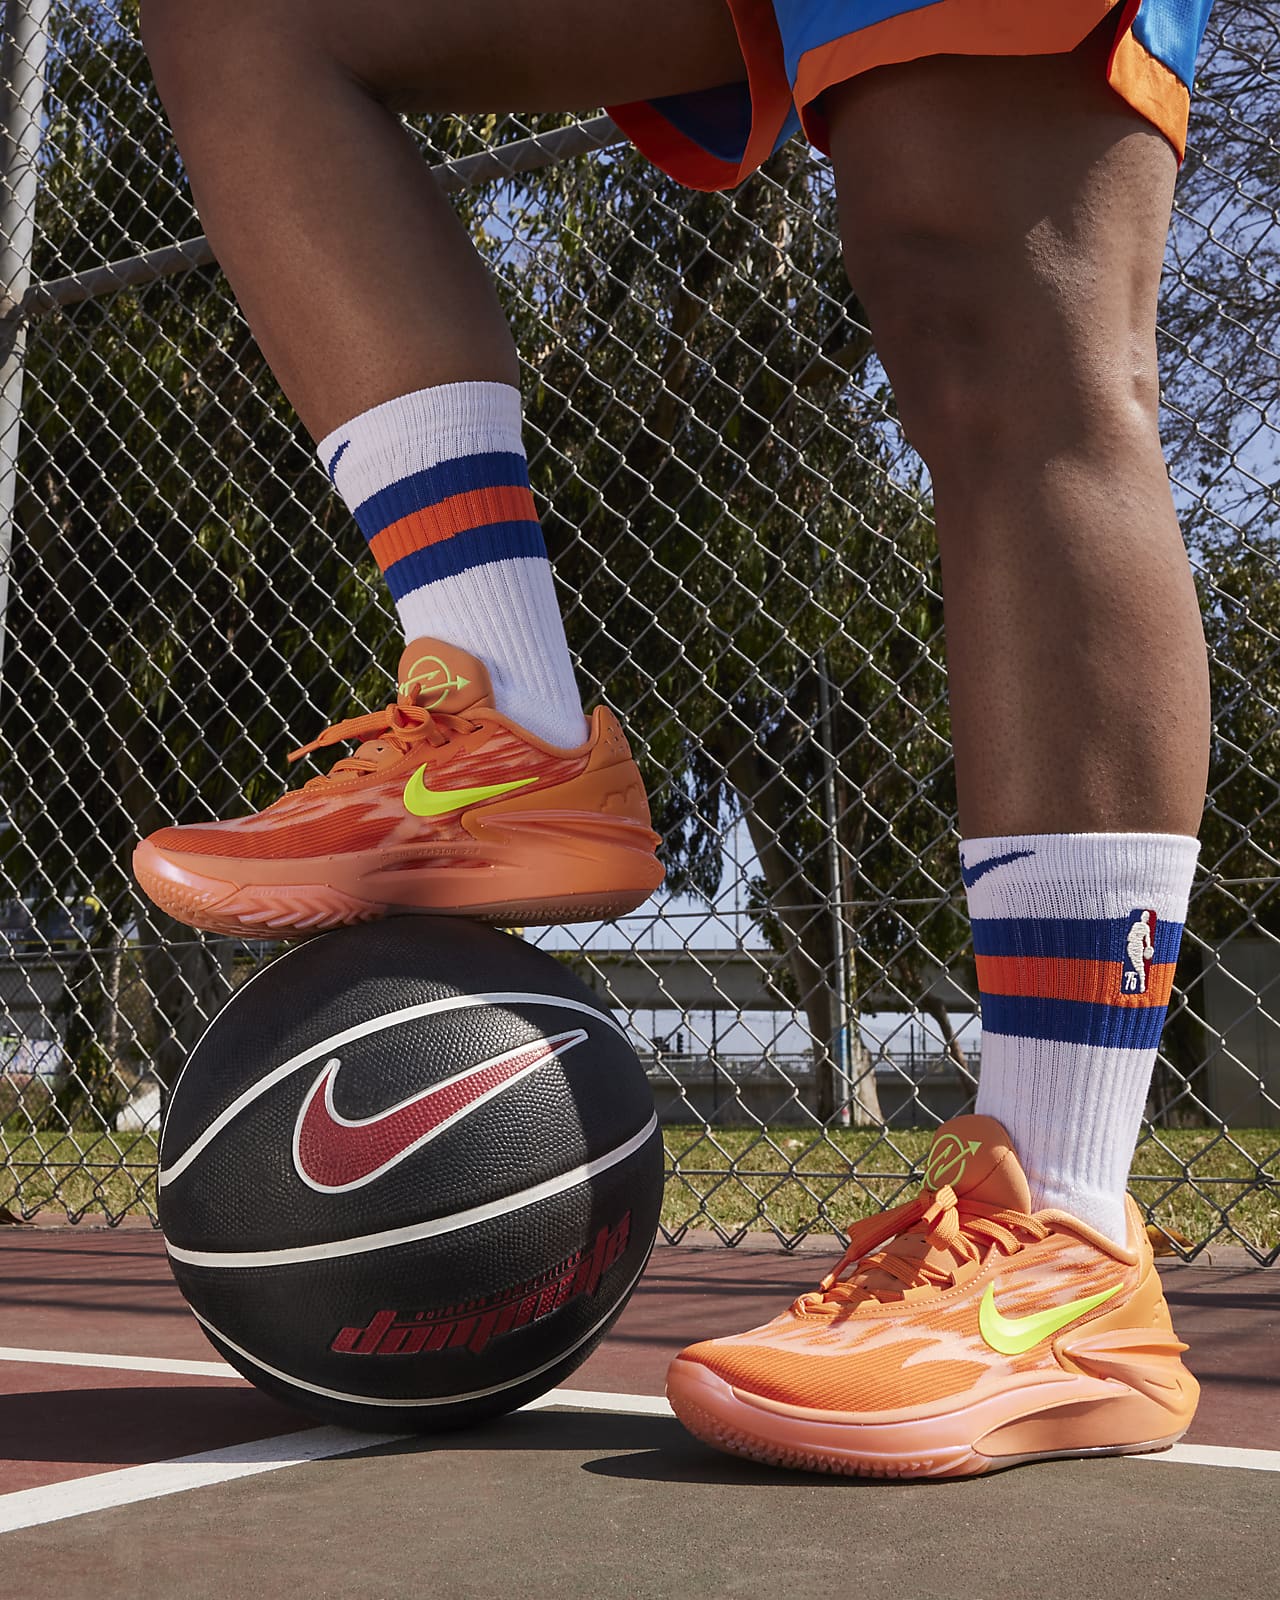 i mellemtiden Uddybe konkurrenter Nike G.T. Cut 2 "Arike Ogunbowale" Basketball Shoes. Nike.com